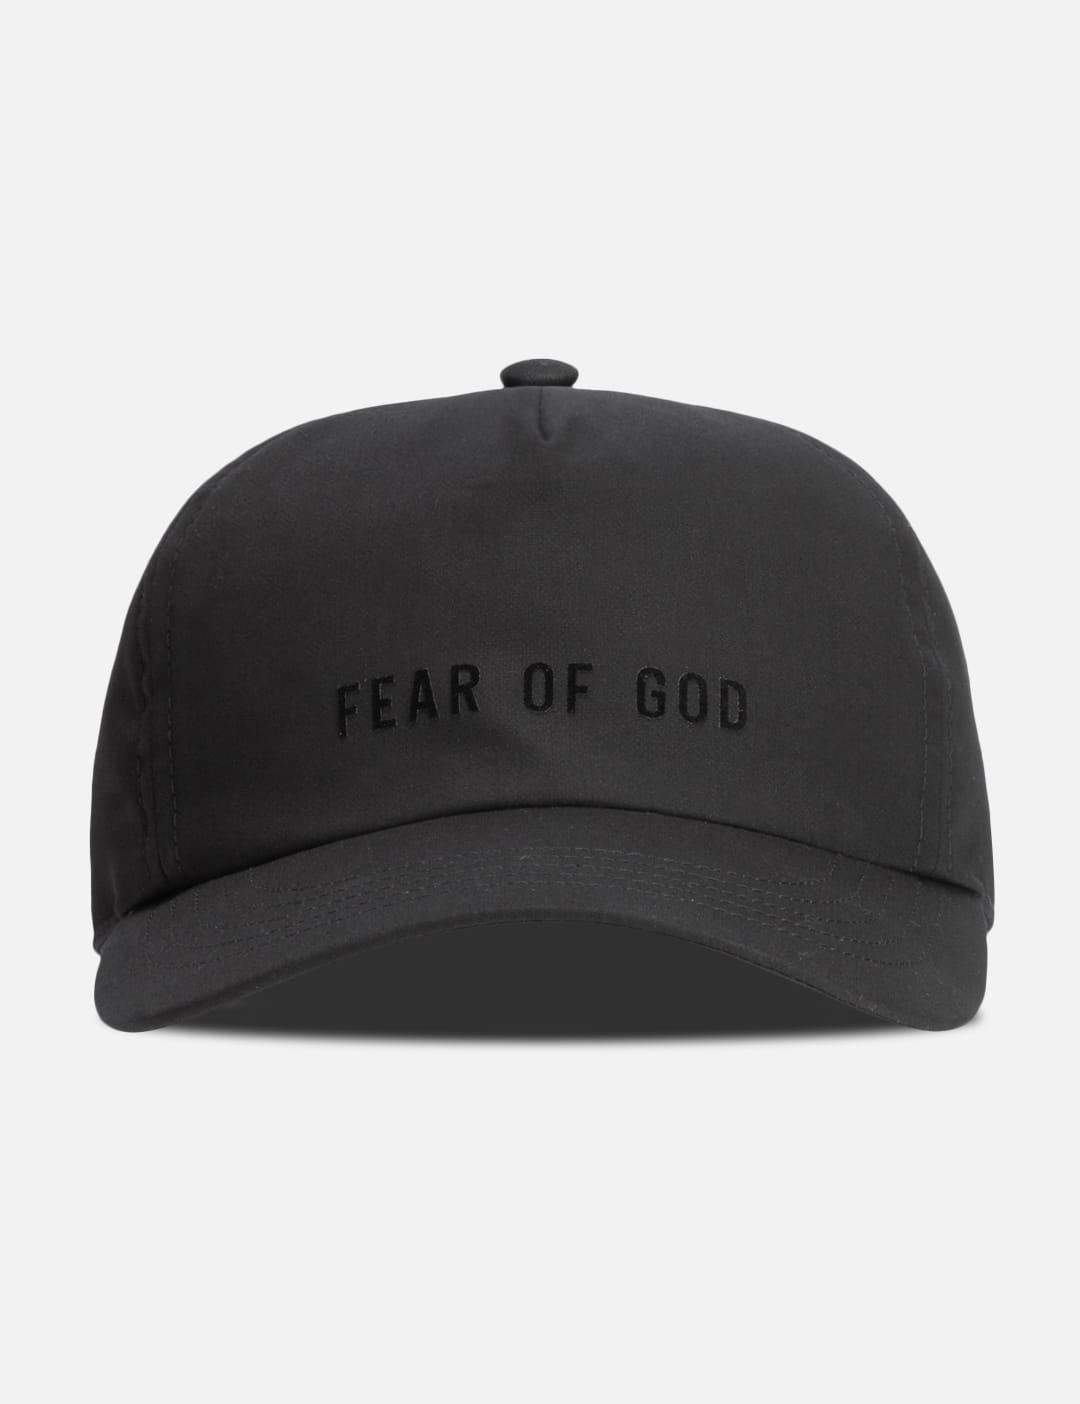 Fear of God Eternal Cotton Hat